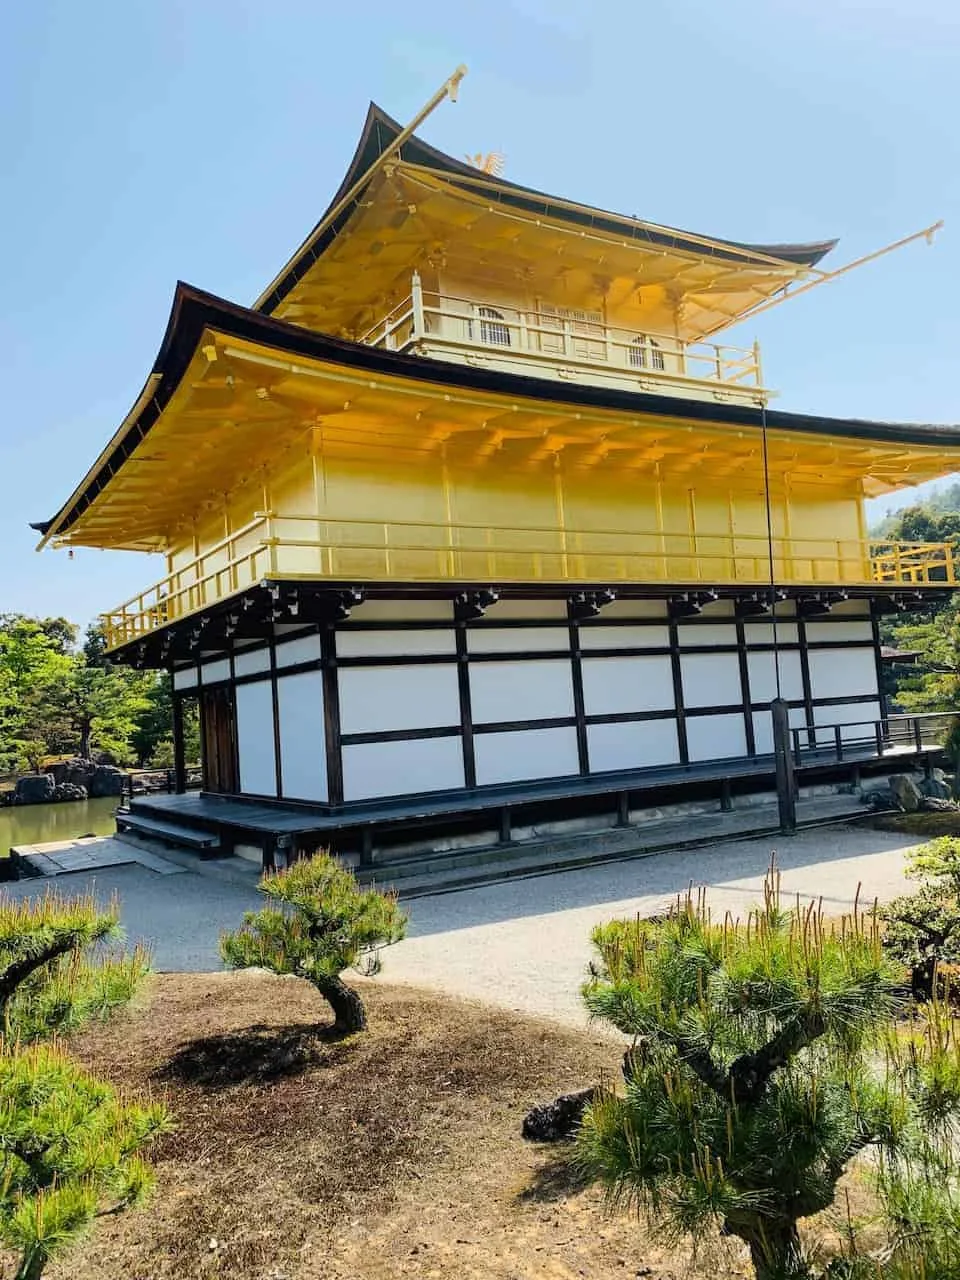 Kinkakuji Temple Kyoto